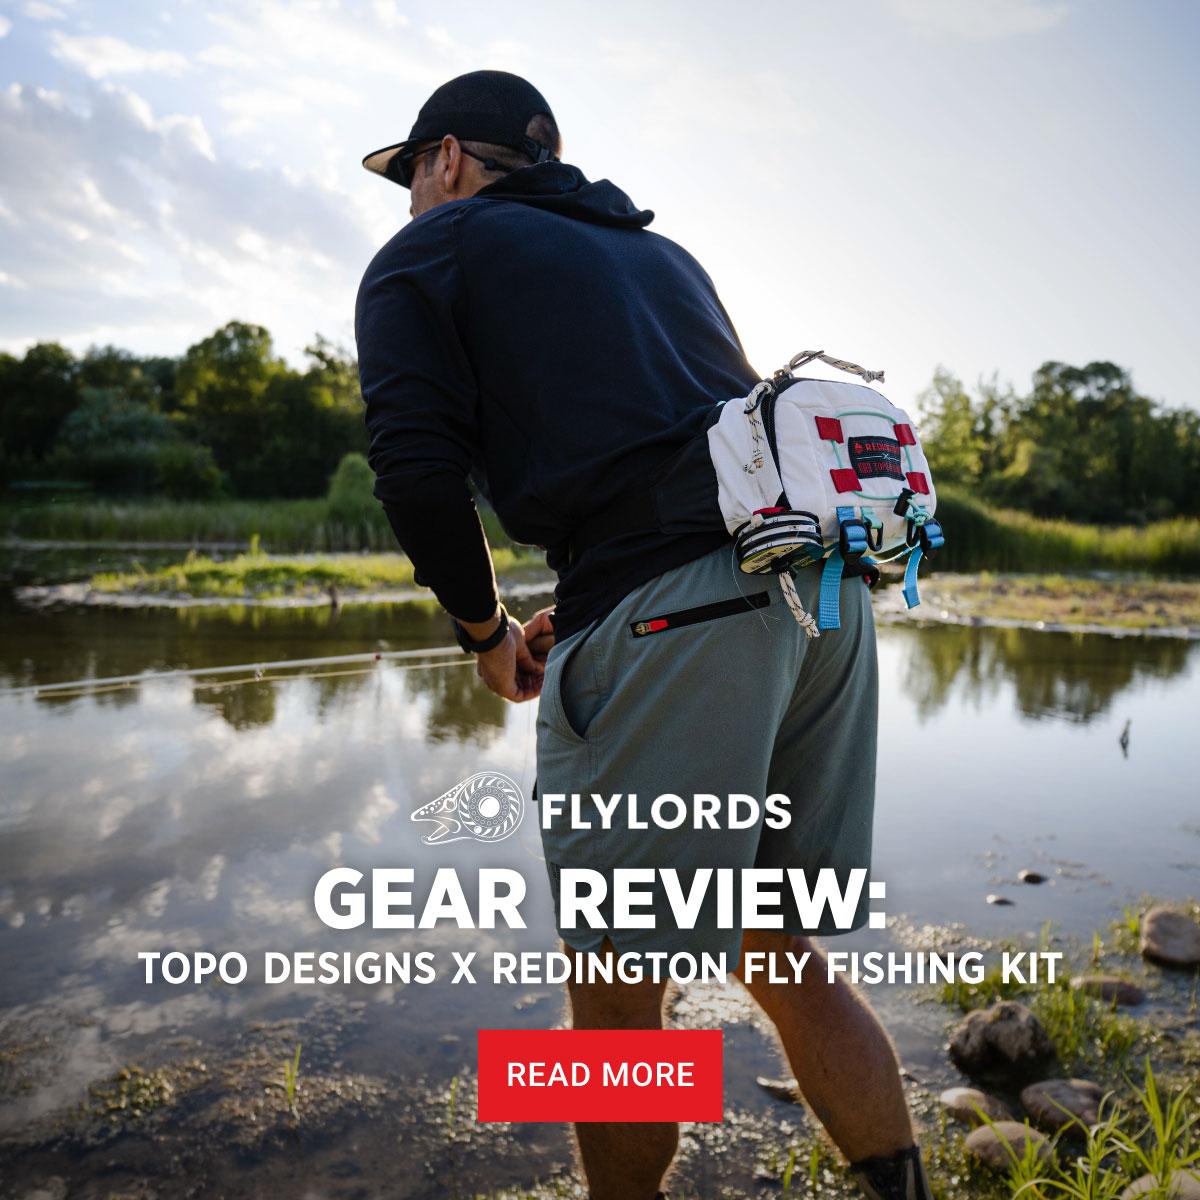 Flylords Review: Topo Designs x Redington Fly Fishing Kit - Topo Designs